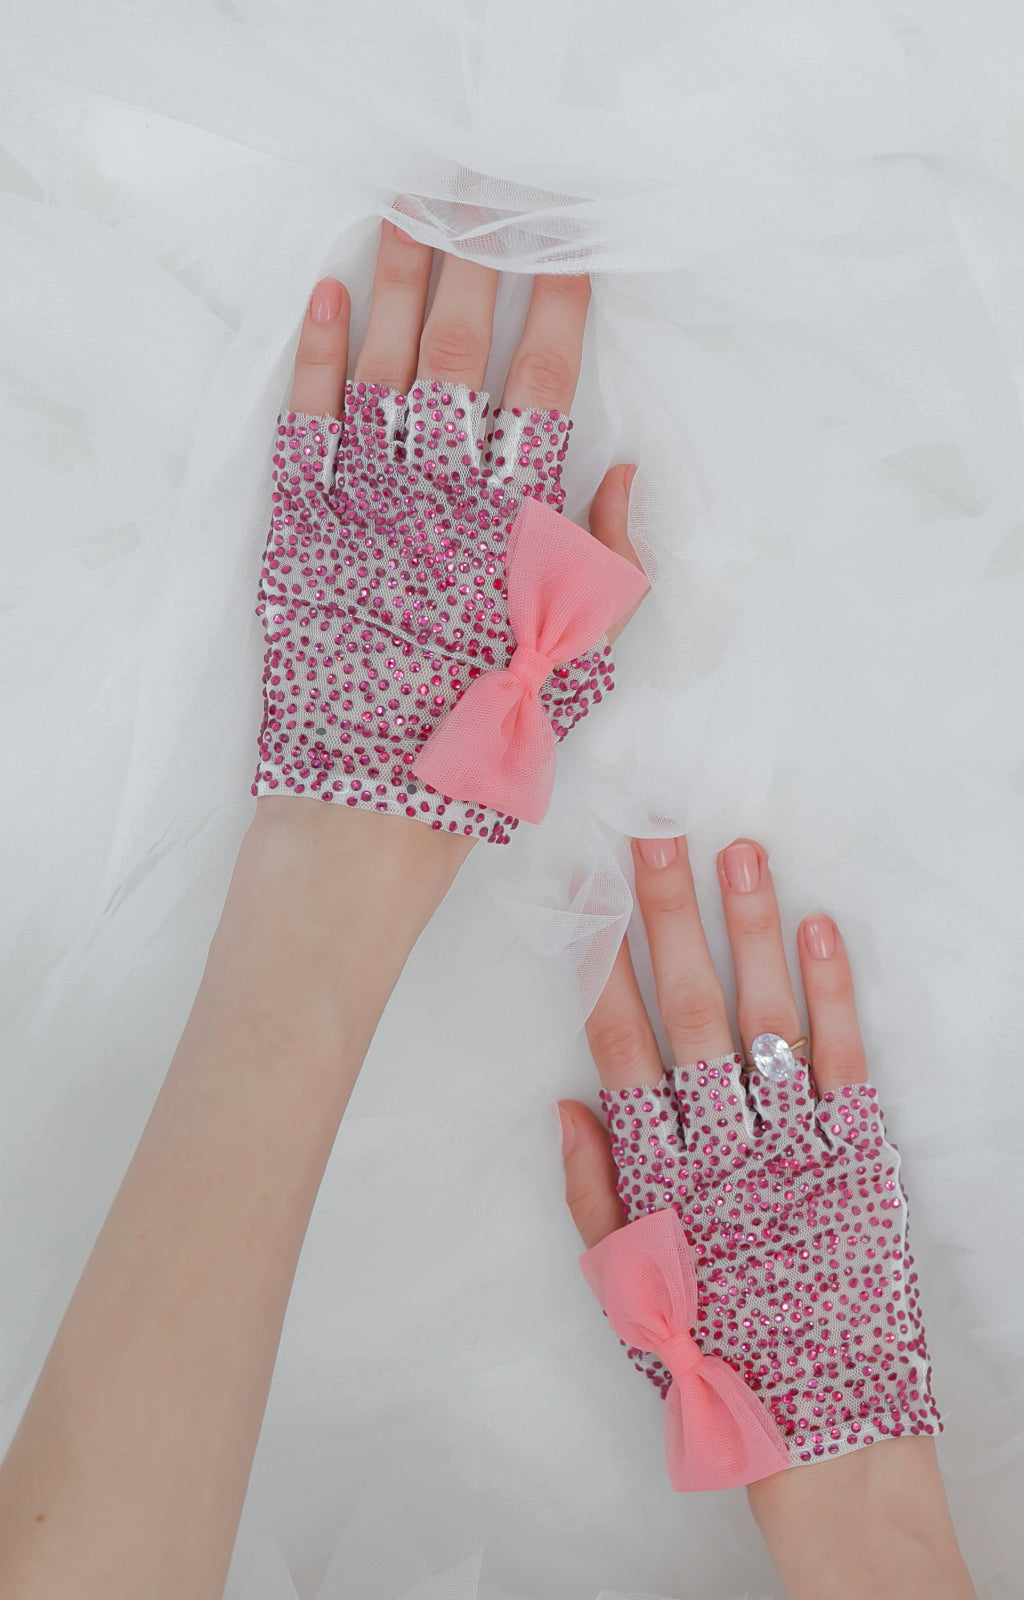 The Paris Gloves